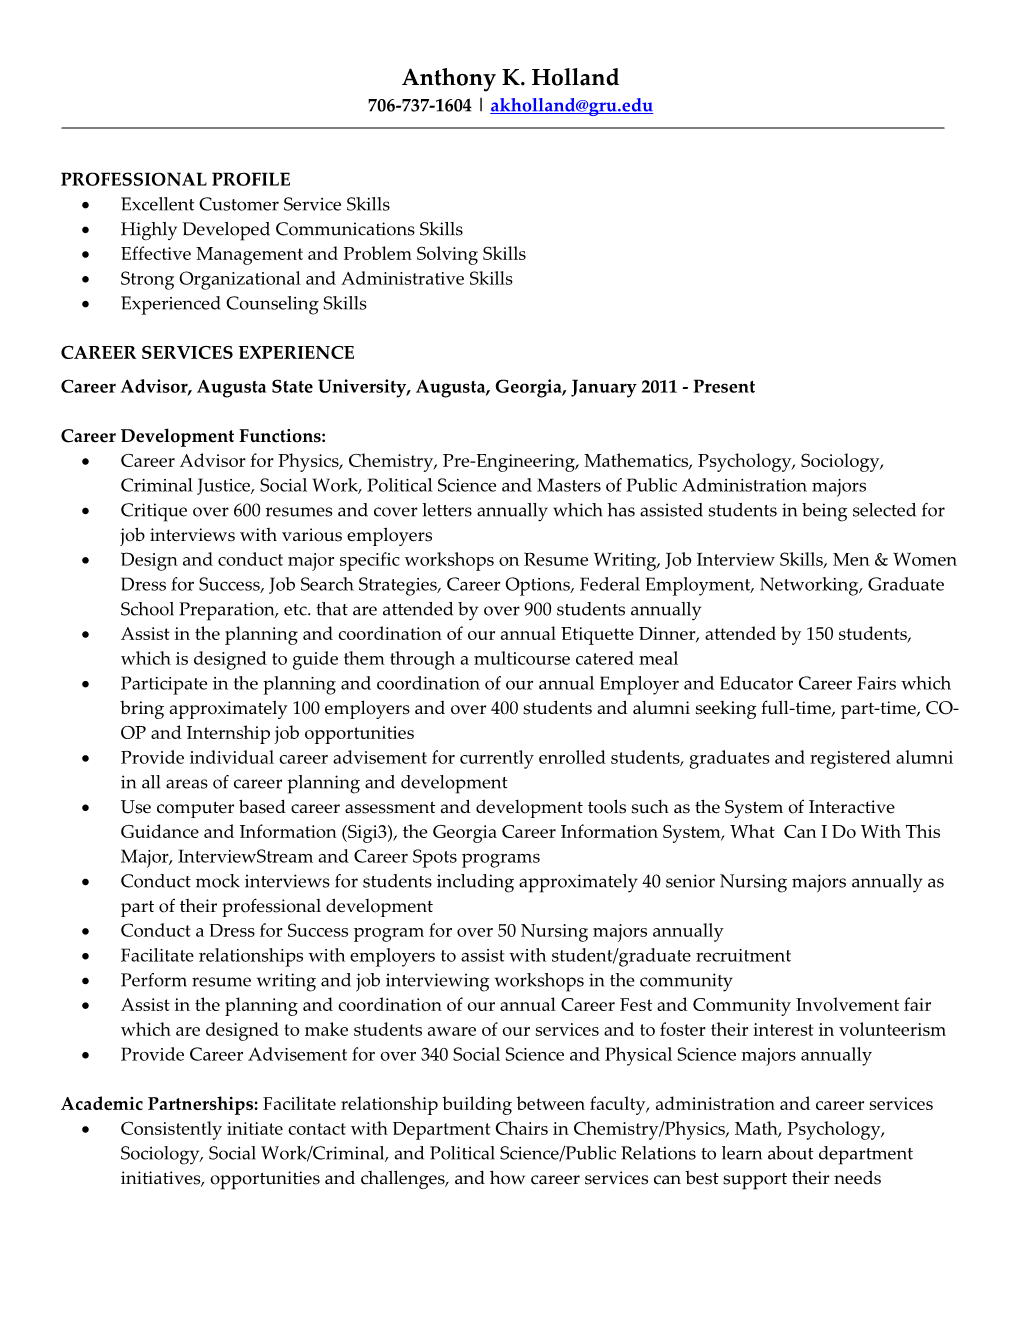 View Resume/CV